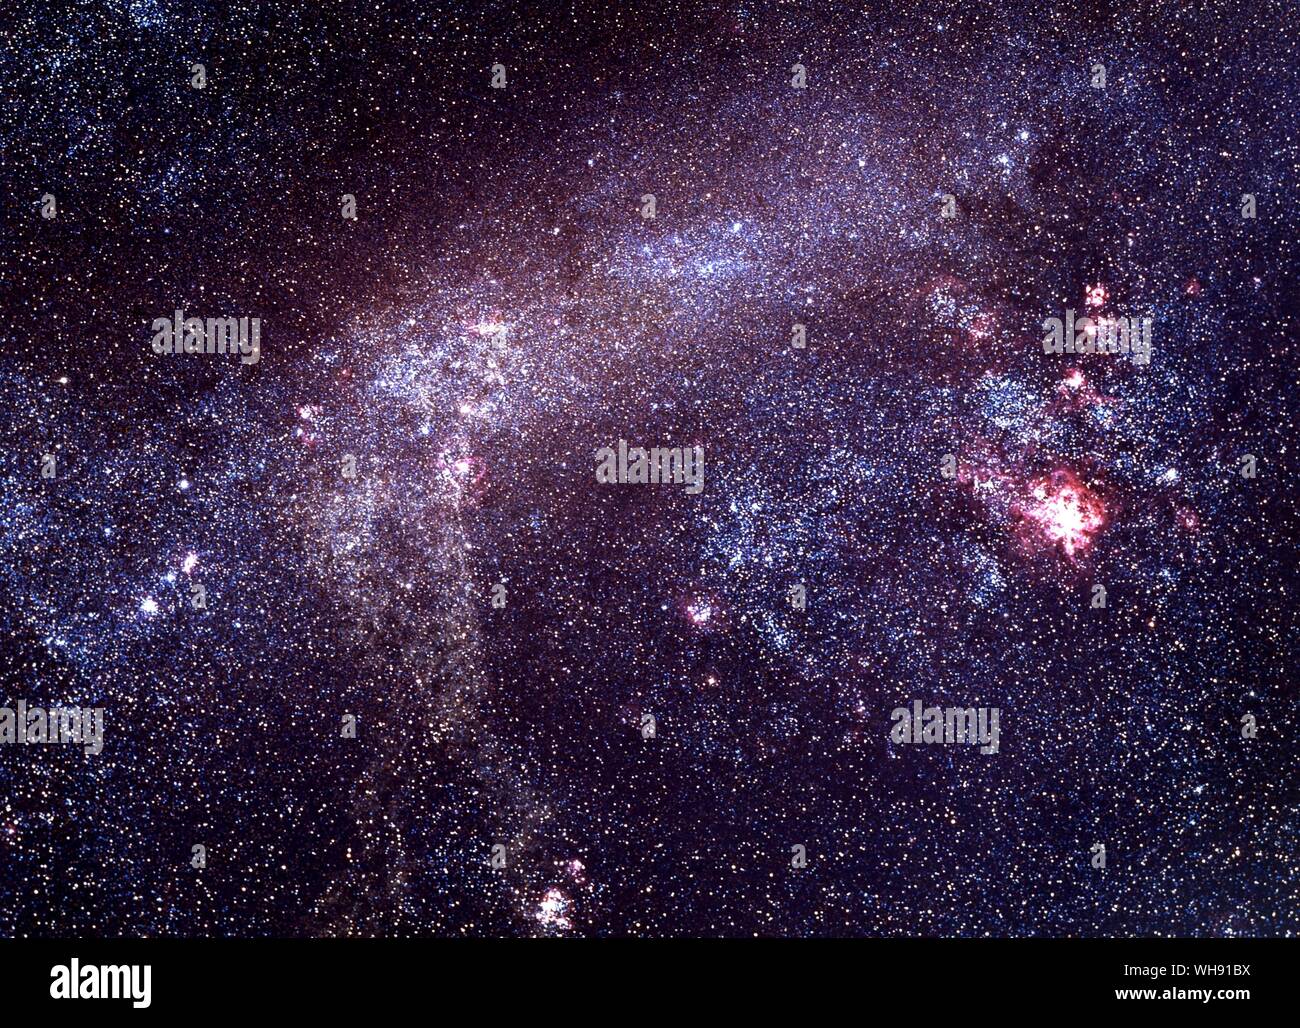 Space - stars/galaxies/nebula Stock Photo